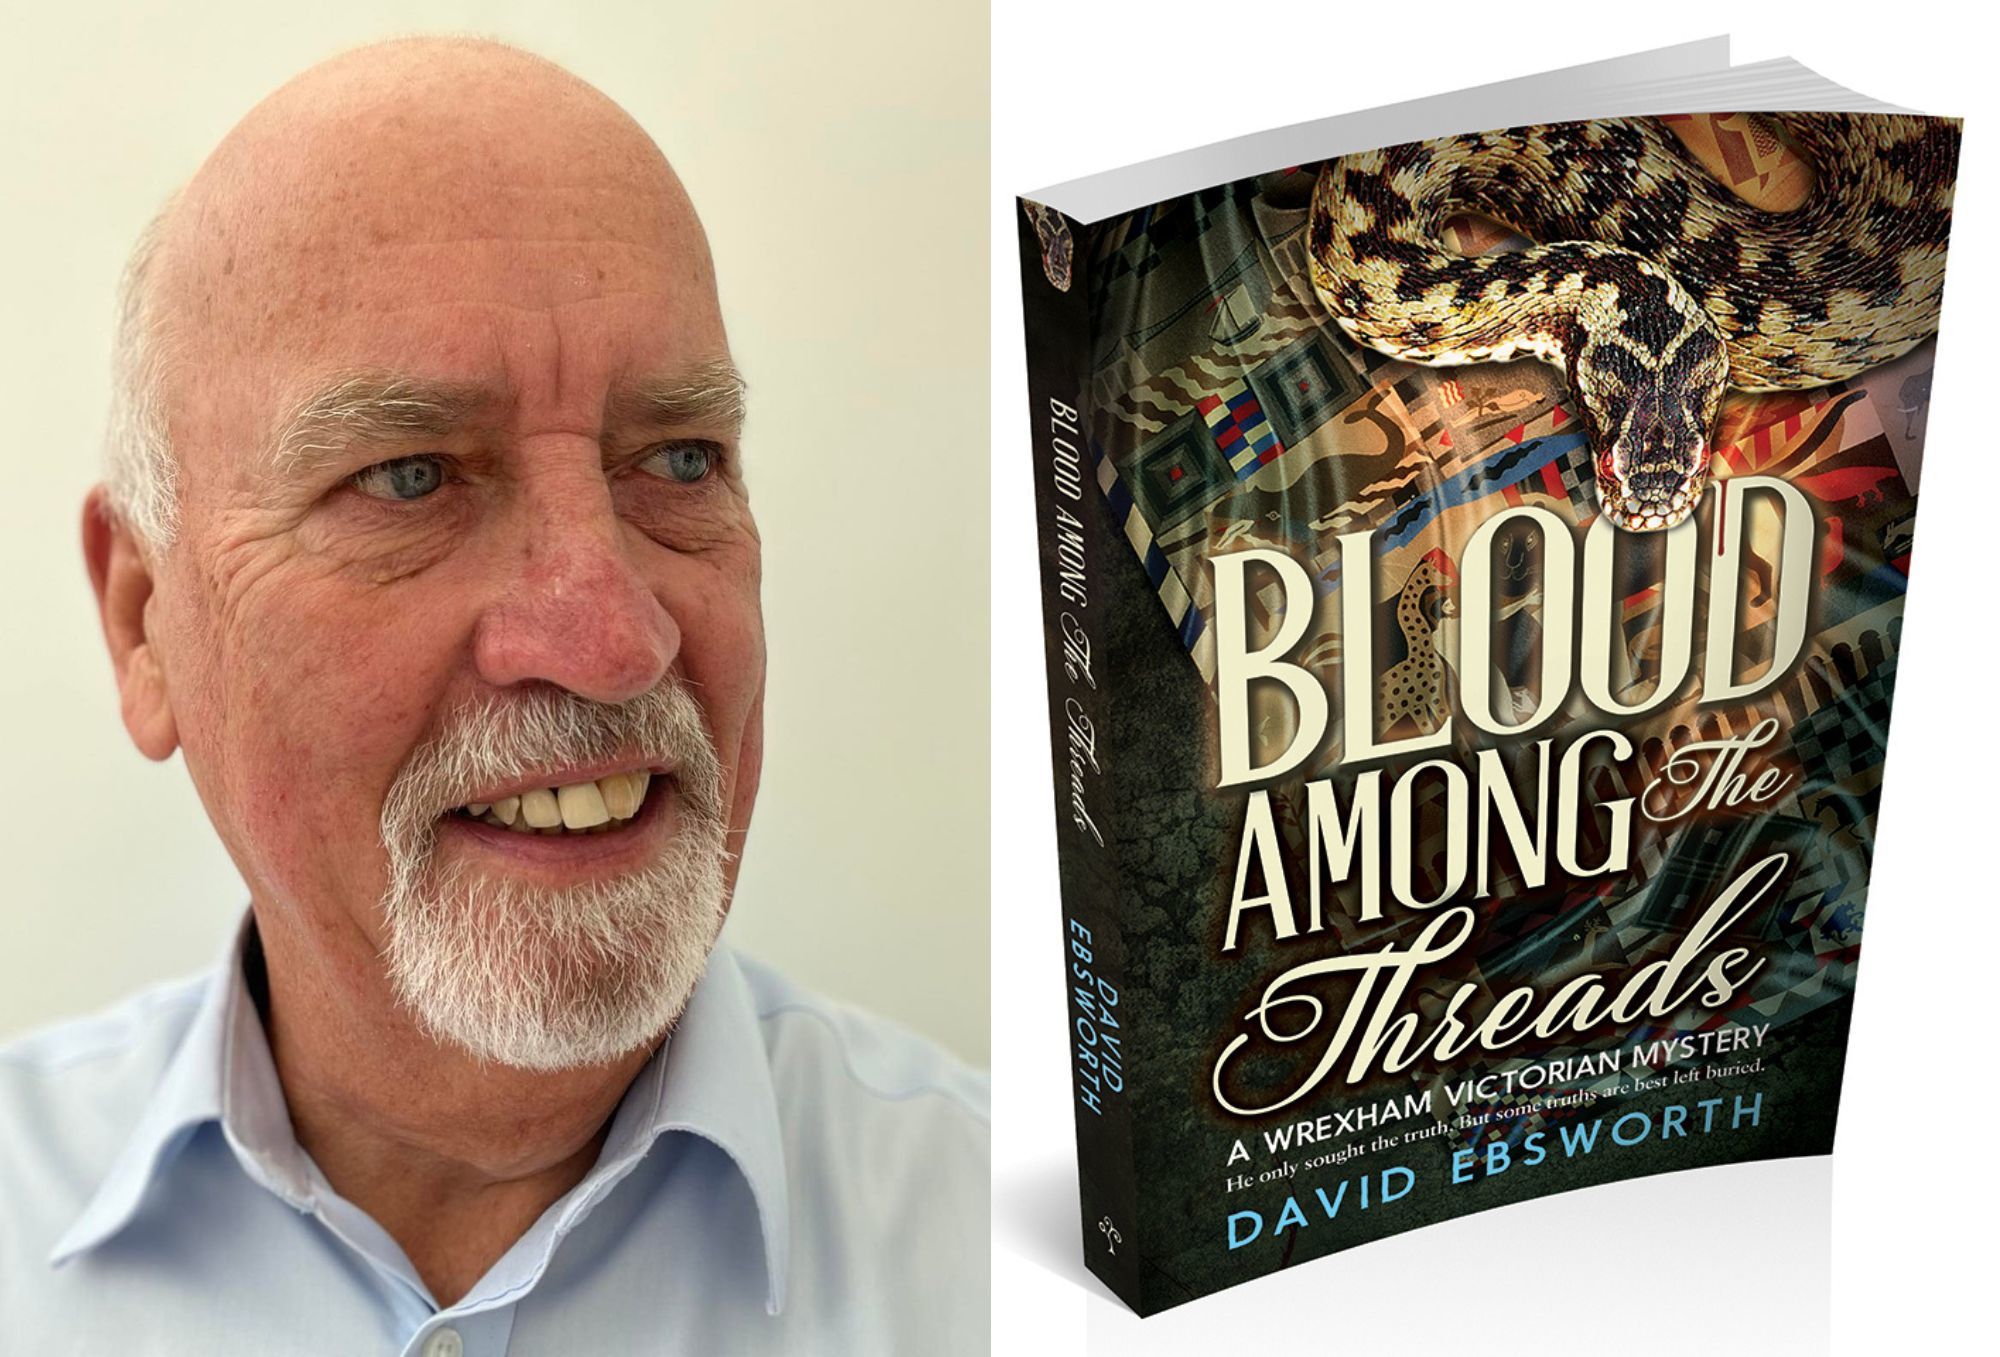 Author David Ebsworths latest novel, Blood Among the Threads.